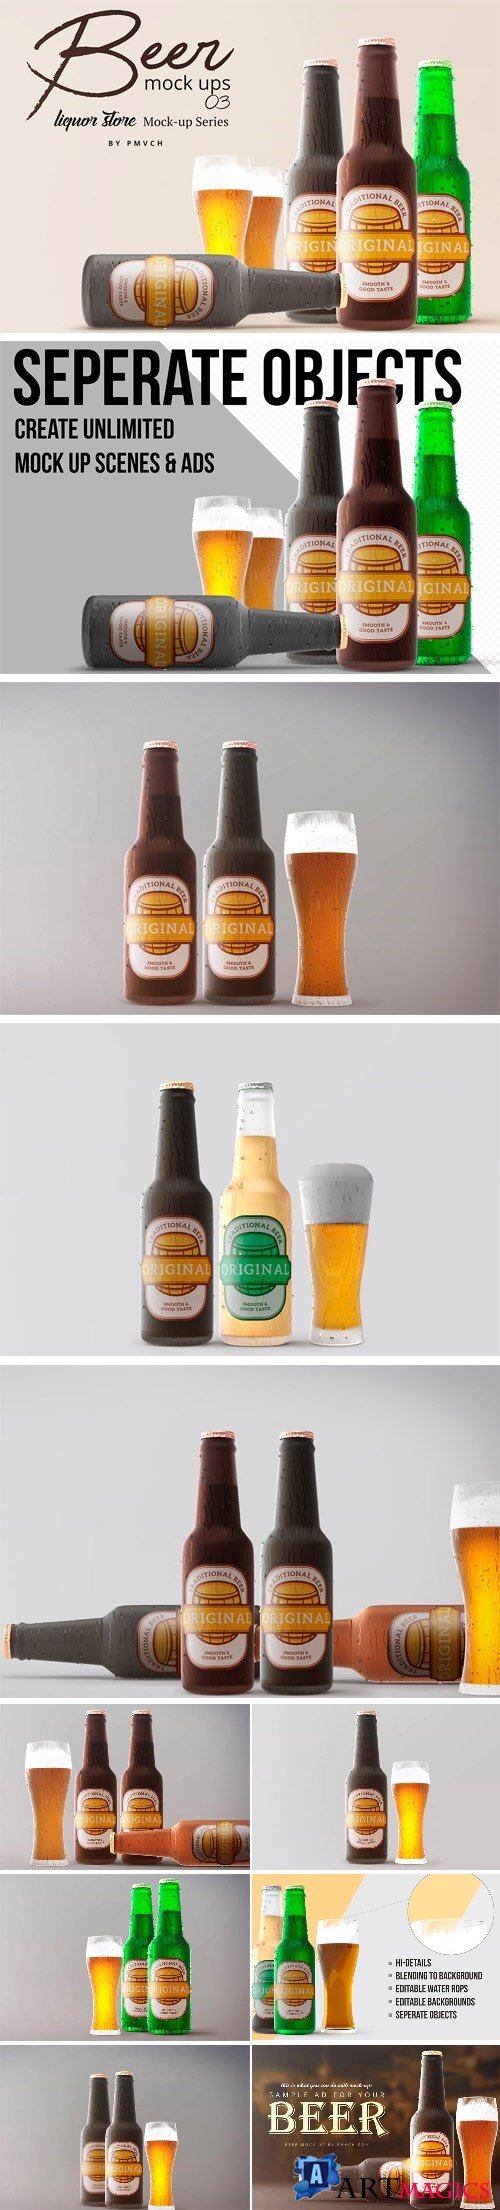 Beer Mockups 03 - Cold Beer - 2391551